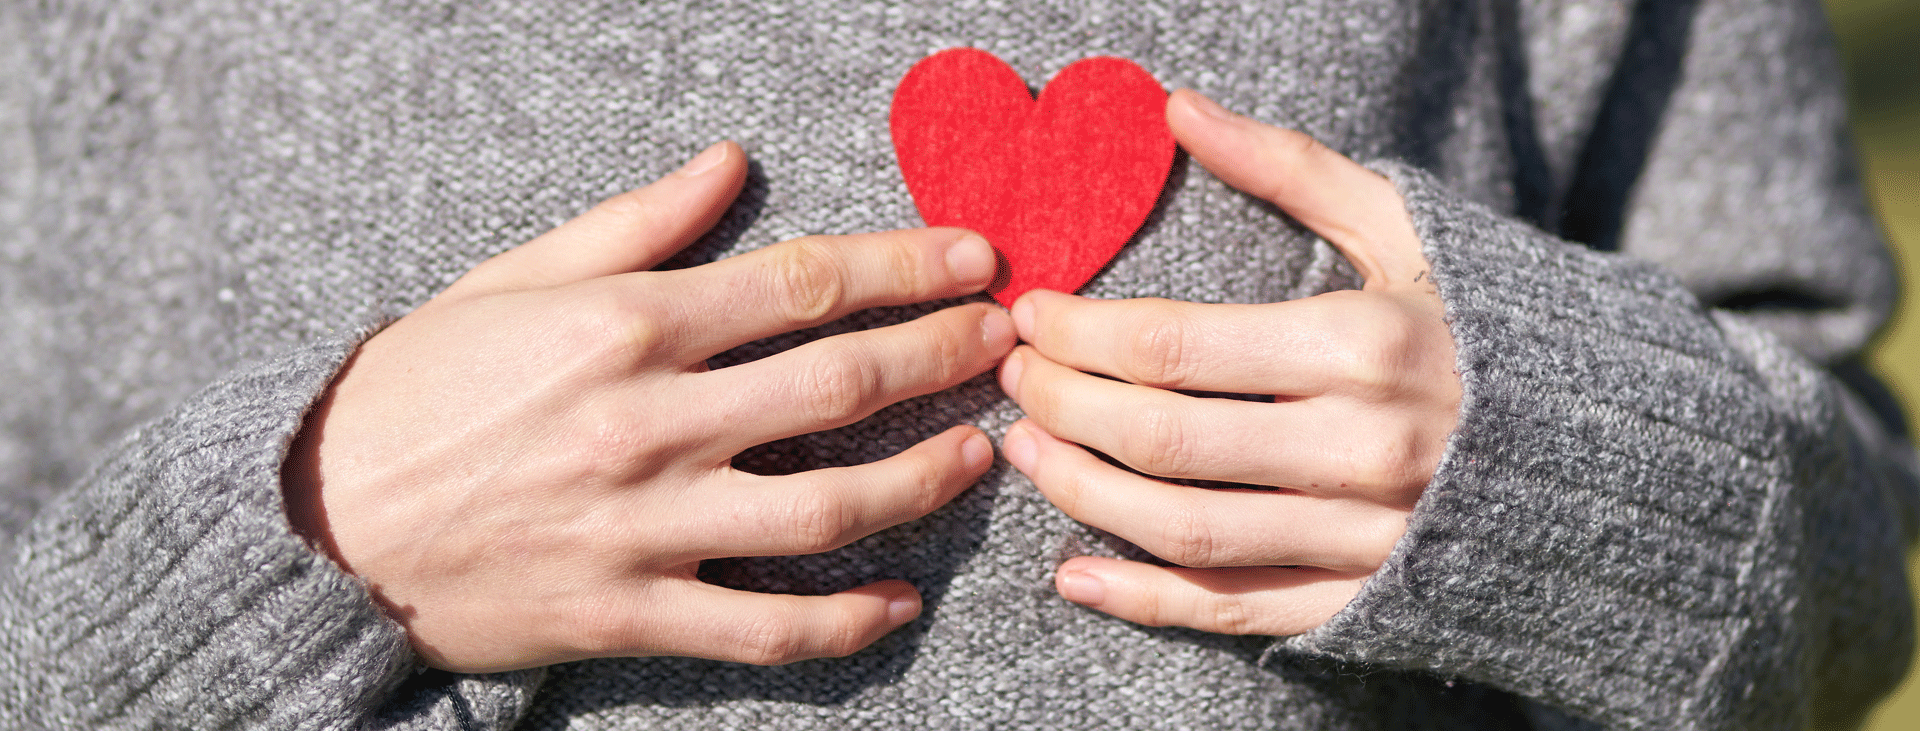 Hands holding a felt cutout heart agains a grey sweater